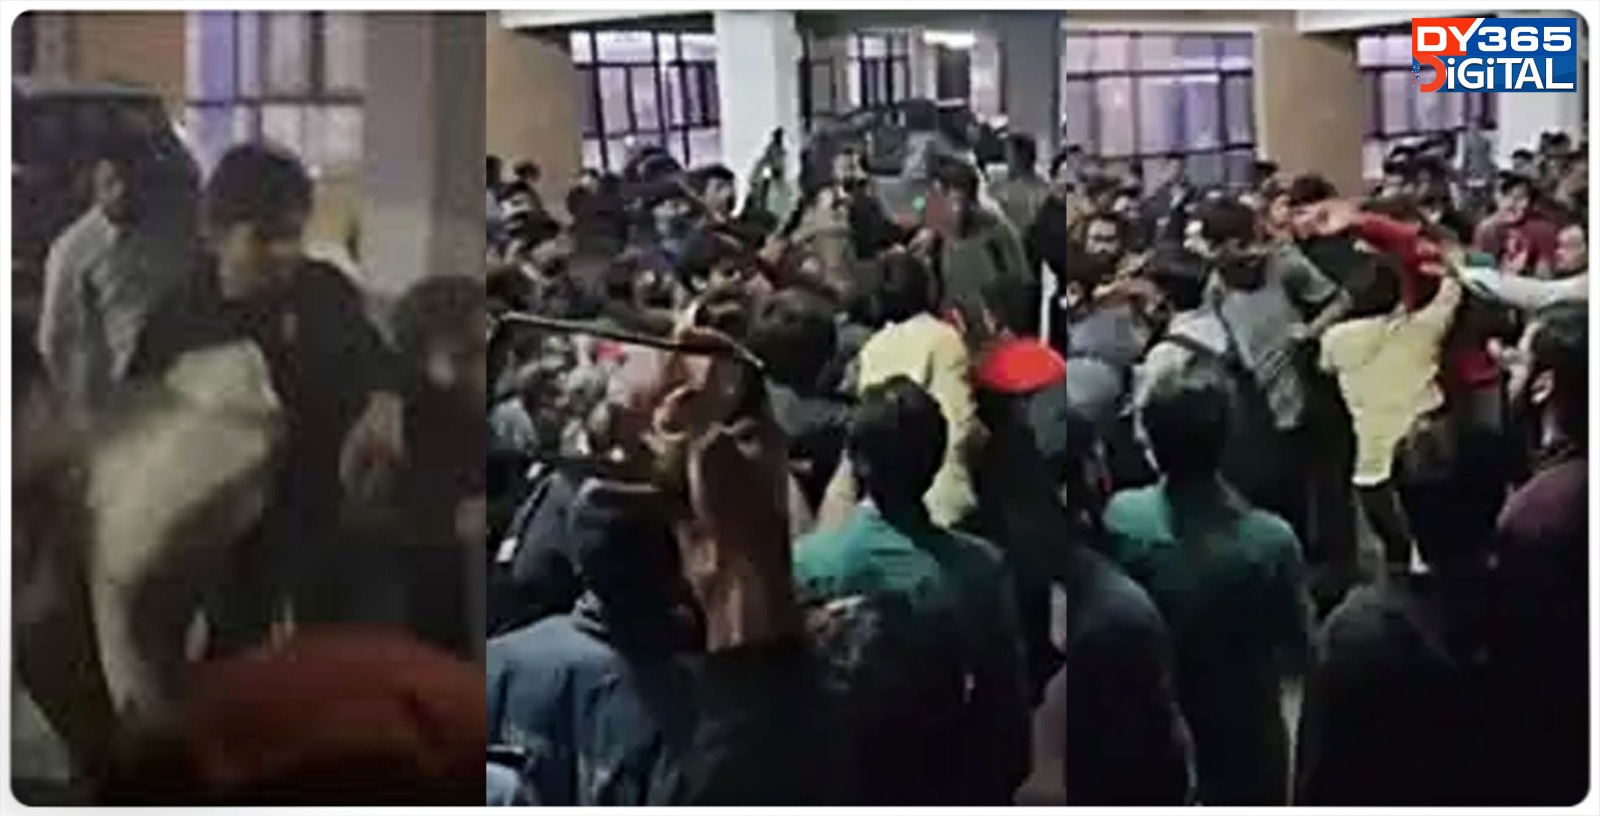 3-students-injured-in-clash-between-two-groups-in-delhi-s-jnu--watch